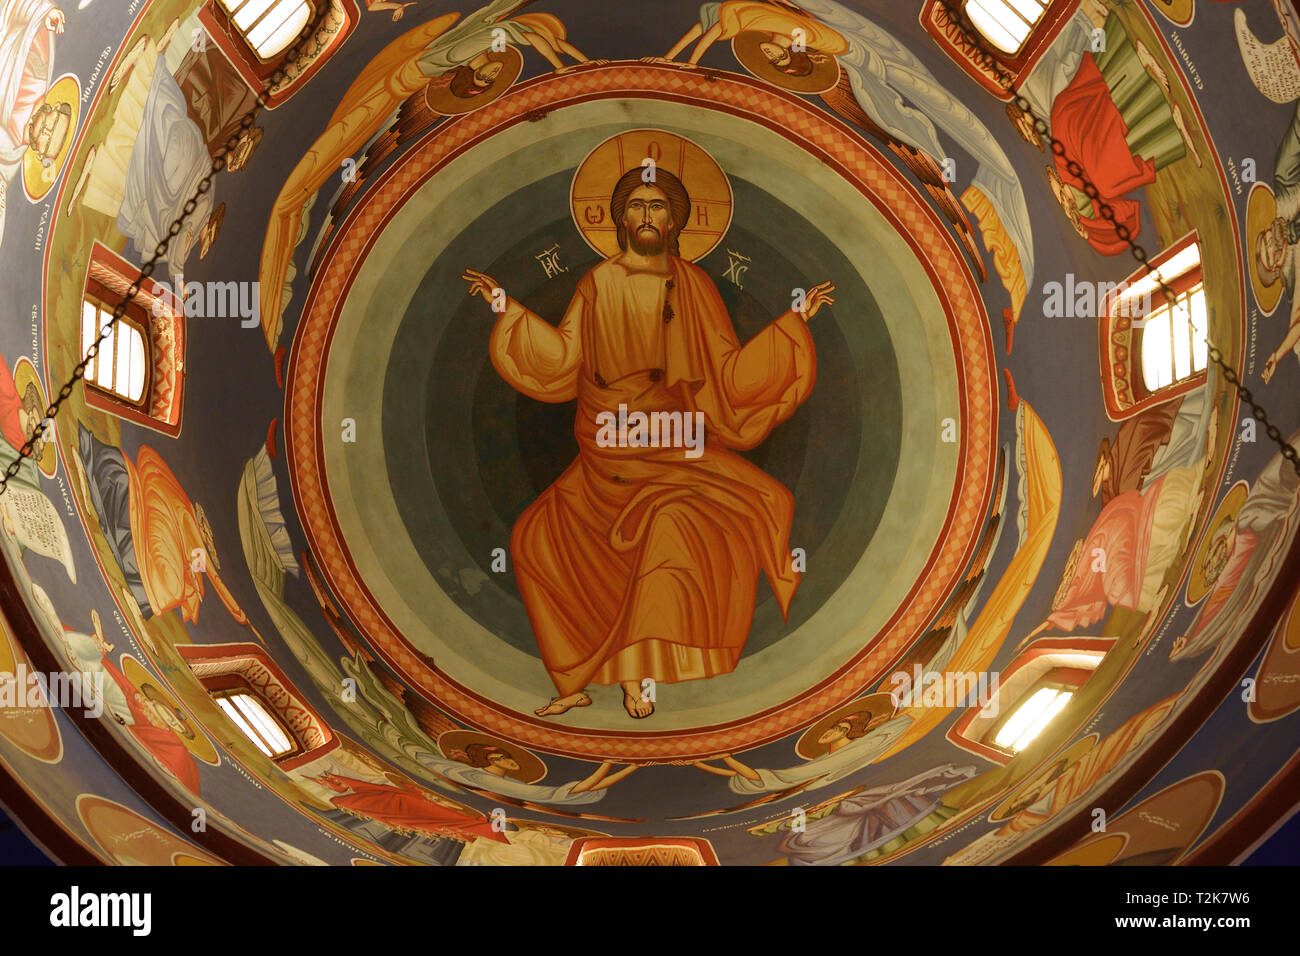 Decorated Dome Ceiling Inside Velika Remeta Monastery, Fruska Gora, Serbia Stock Photo